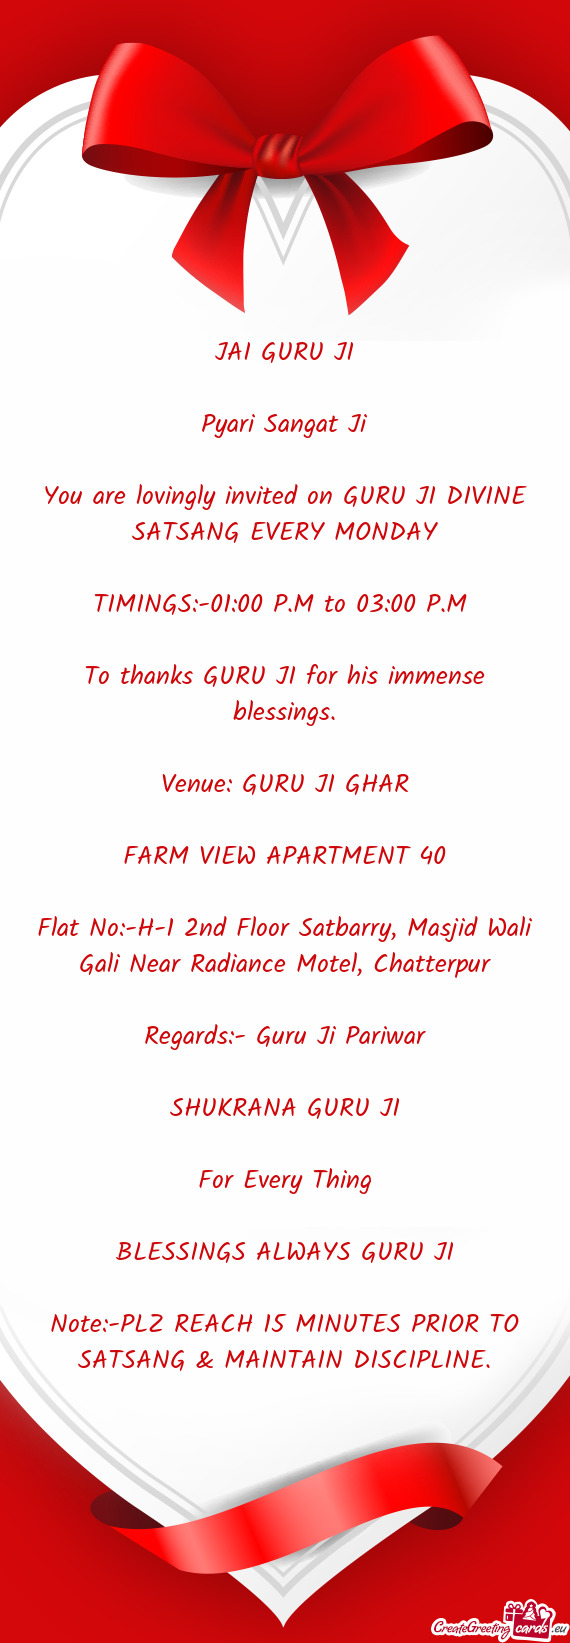 Flat No:-H-1 2nd Floor Satbarry, Masjid Wali Gali Near Radiance Motel, Chatterpur